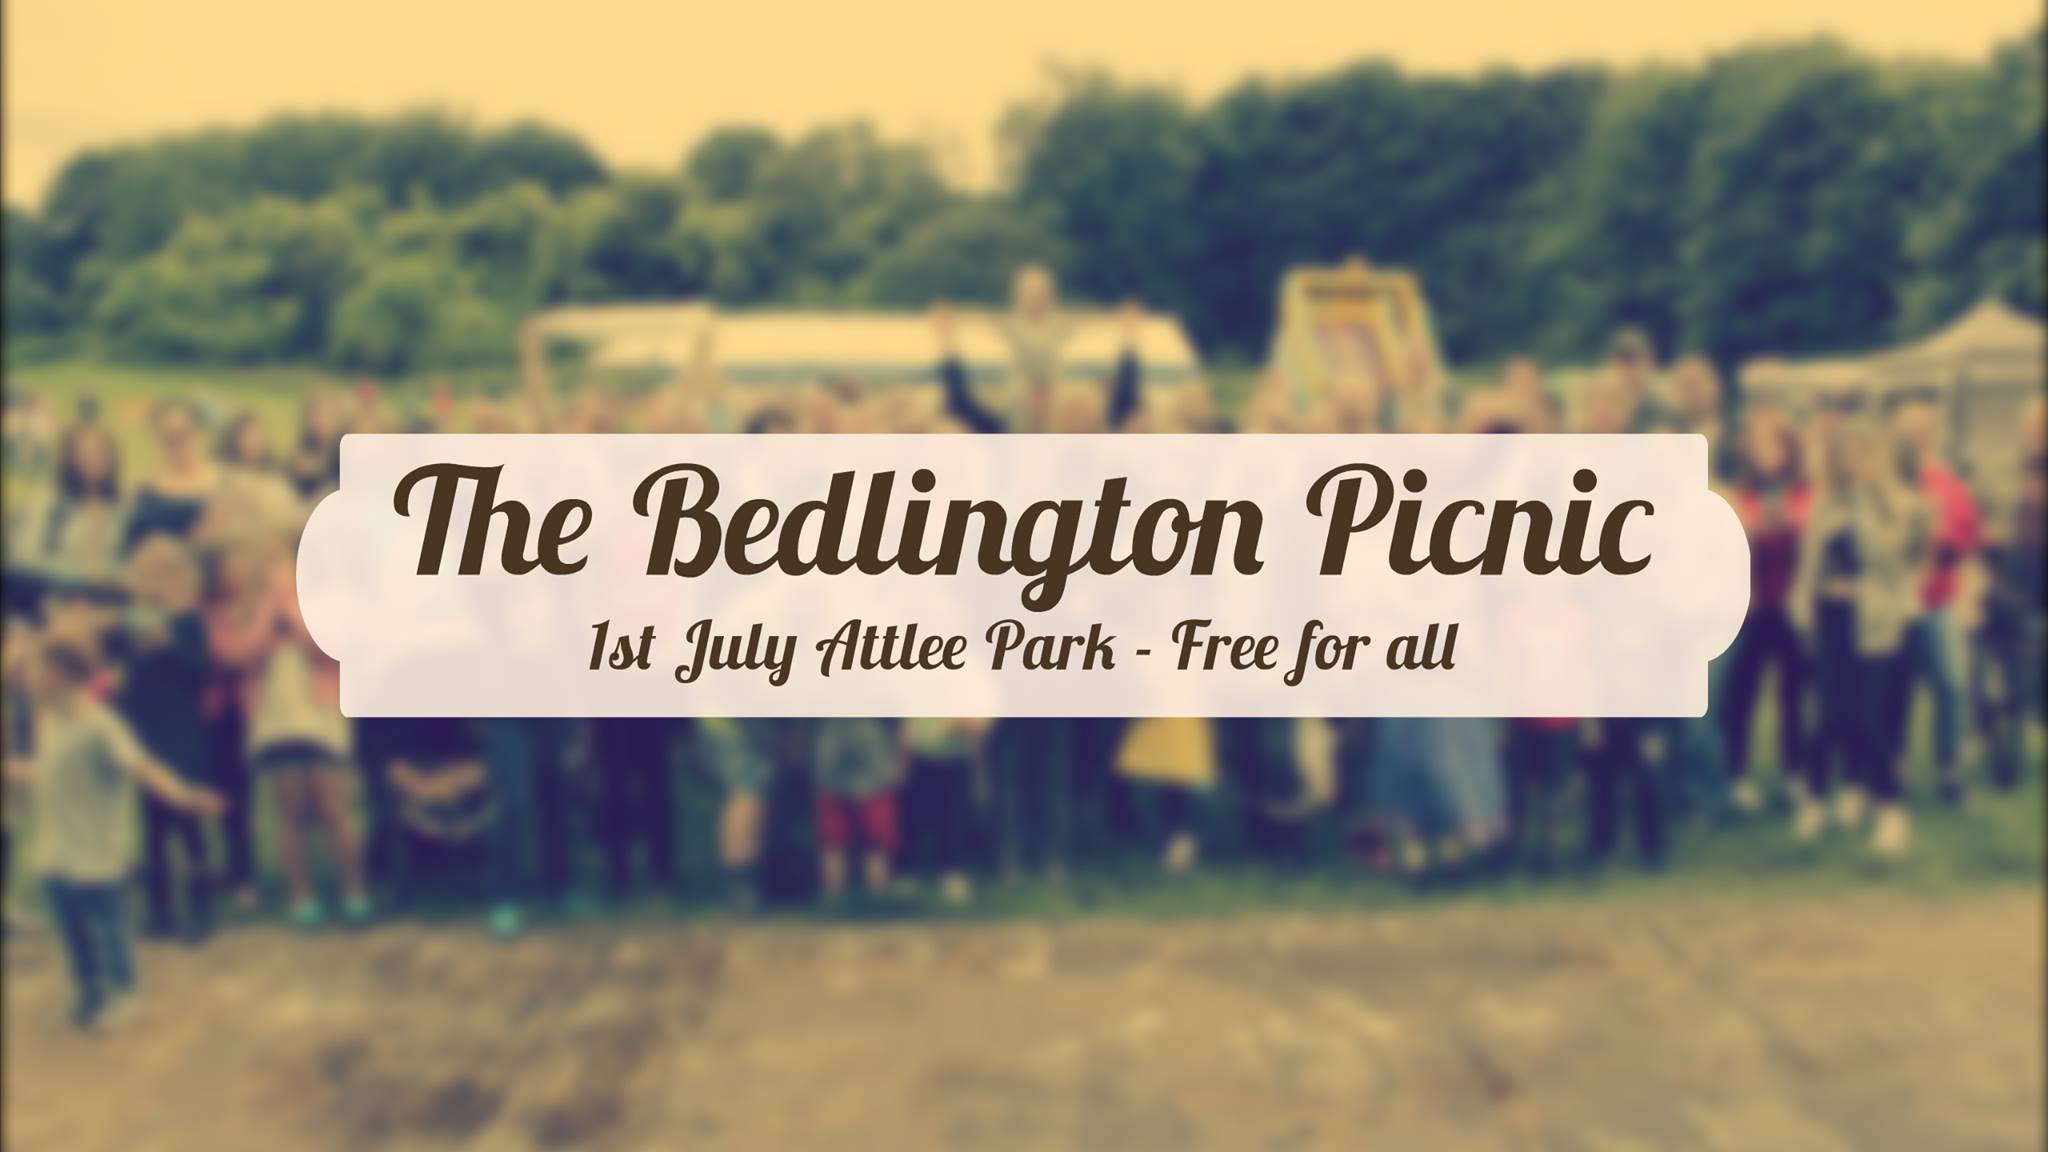 Bedlington Picnic